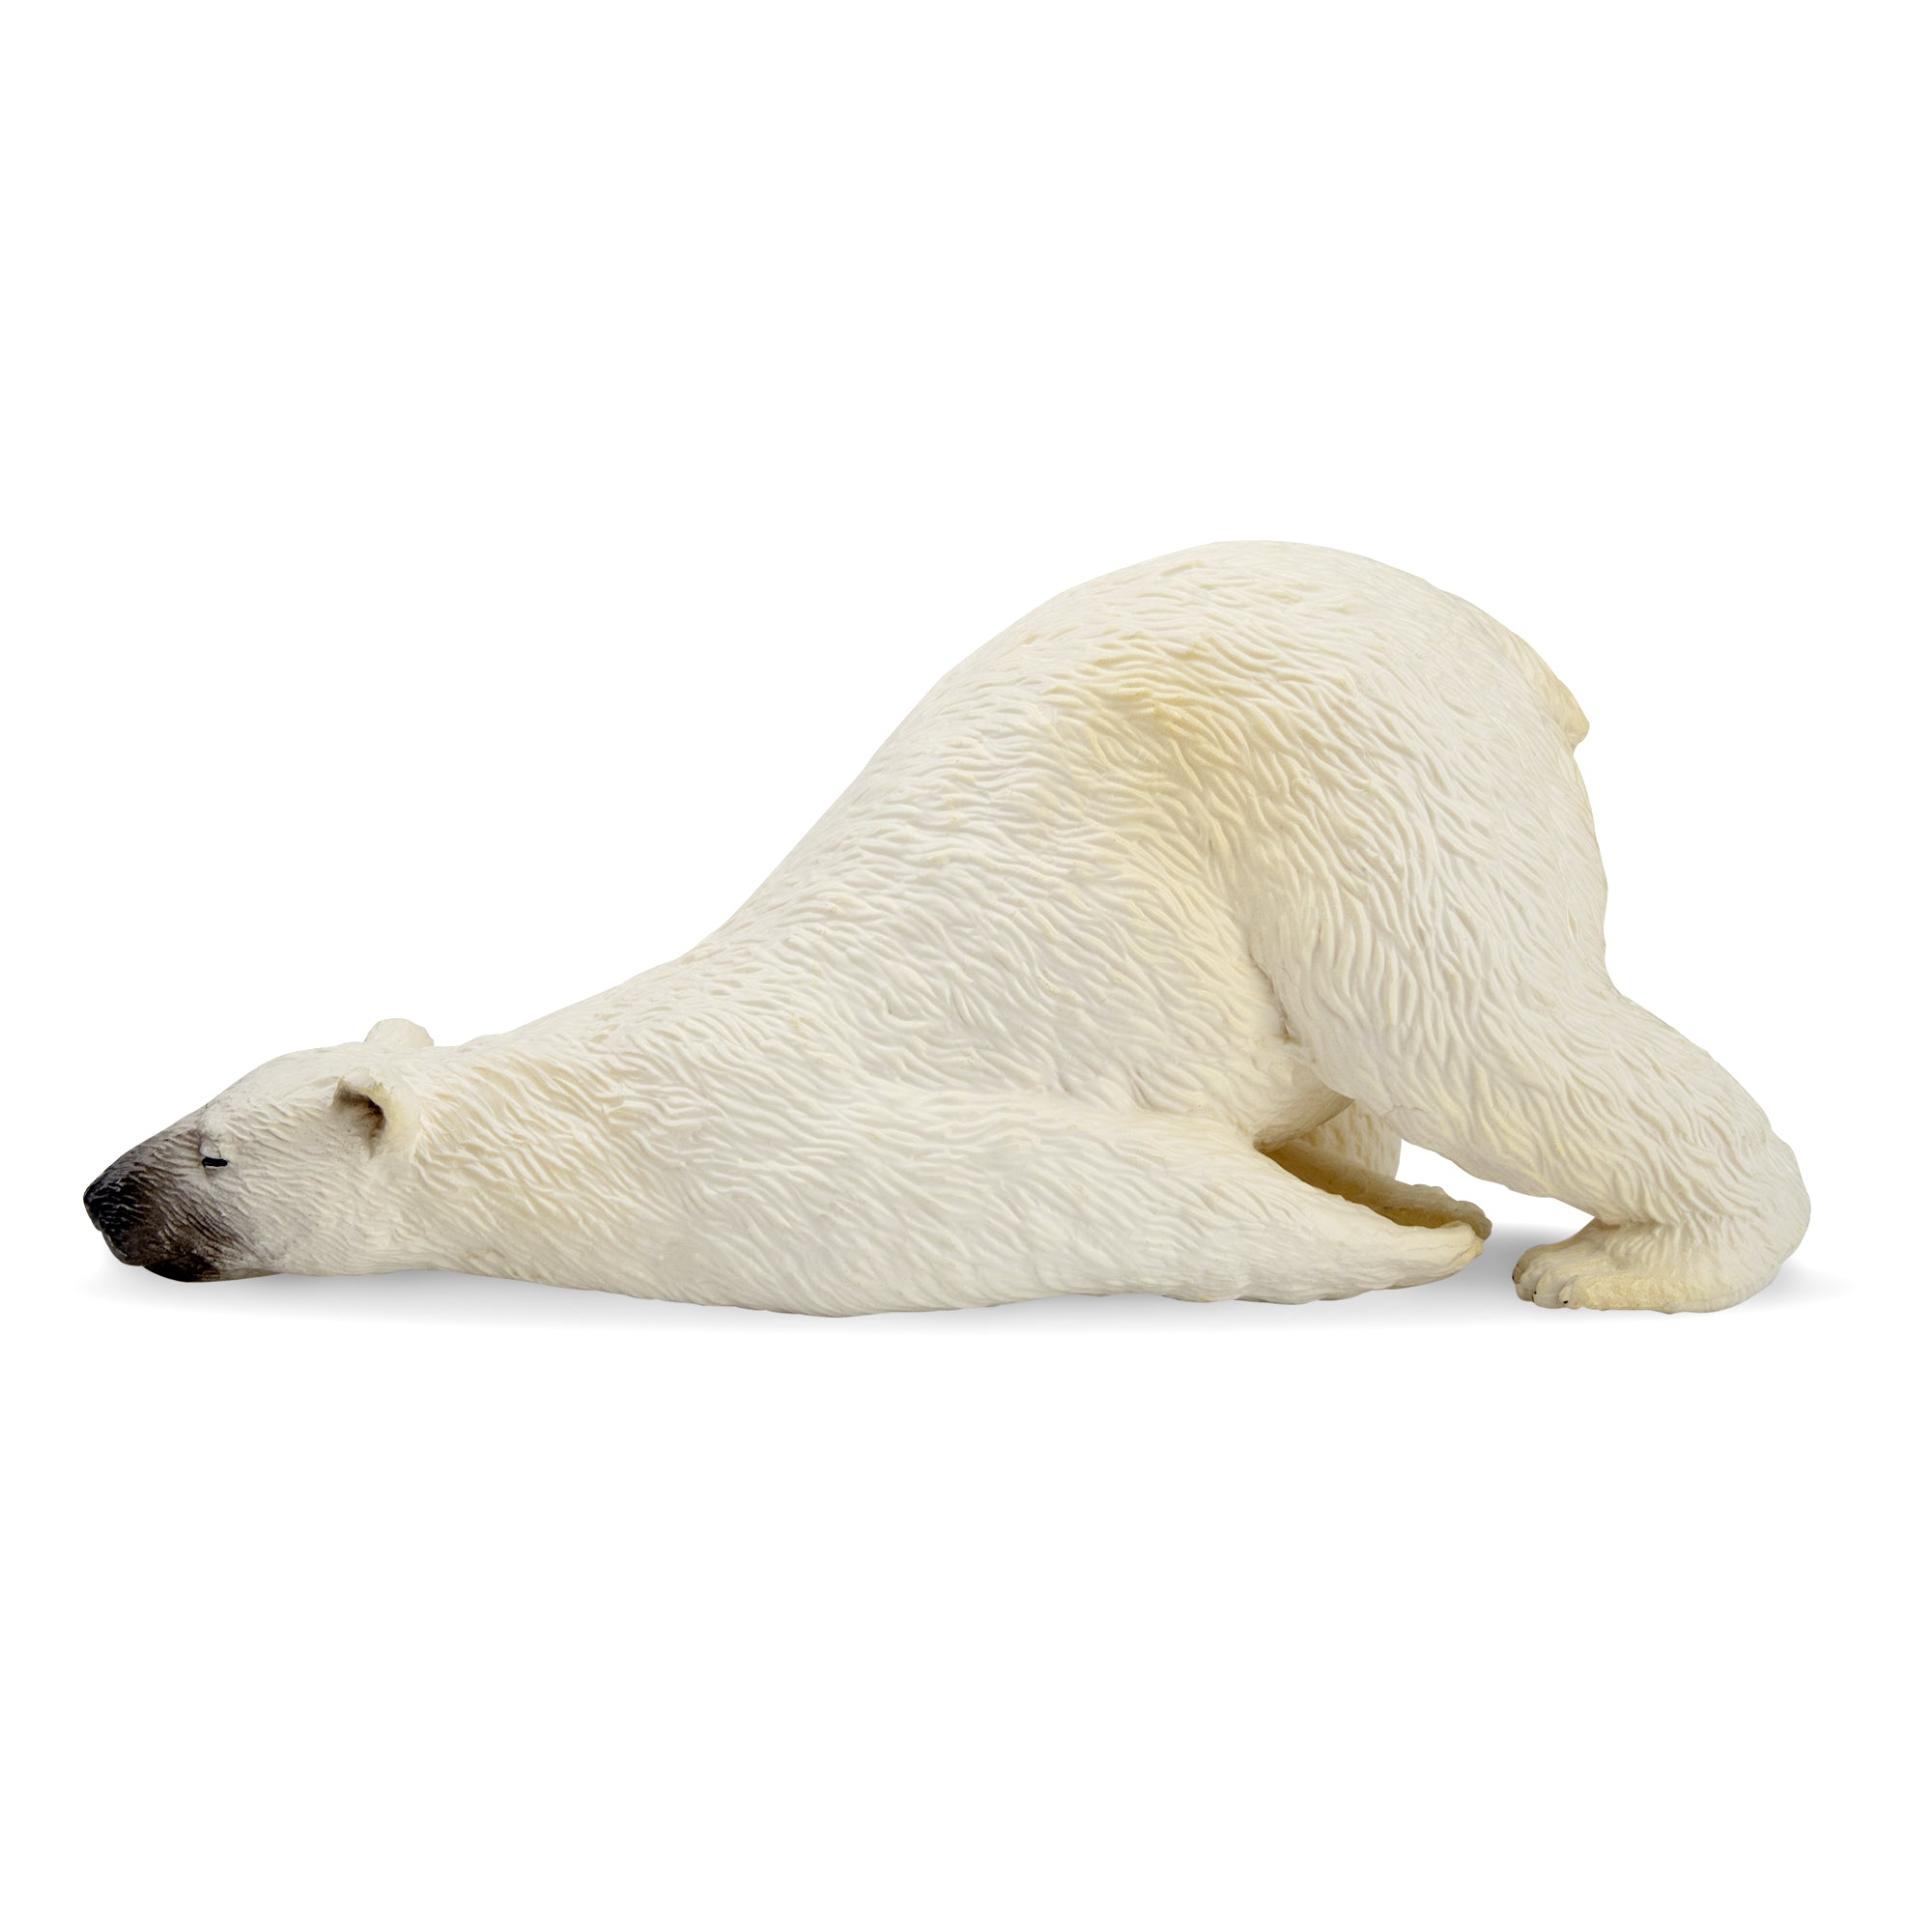 Toymany Lying Adult Polar Bear Figurine Toy